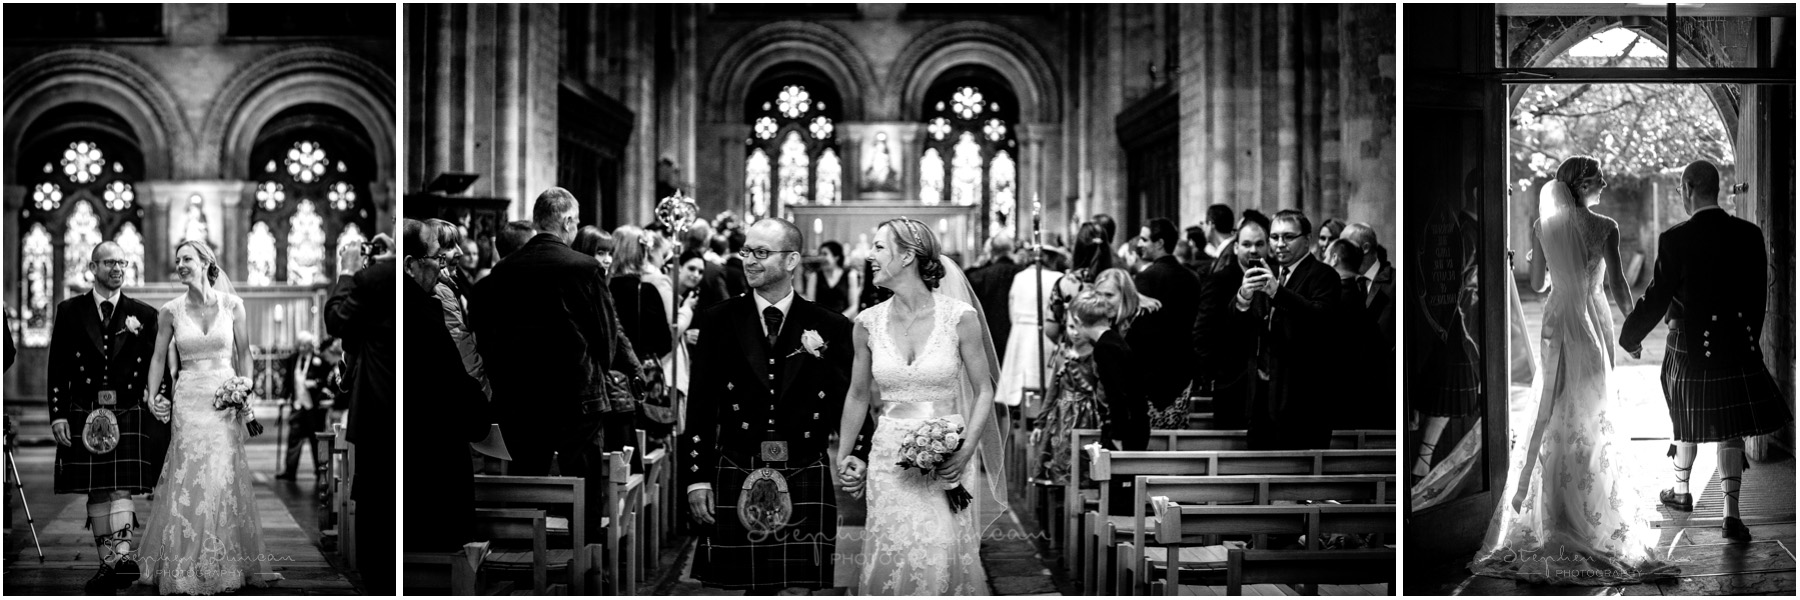 Romsey Abbey wedding photographer couple walks down aisle together